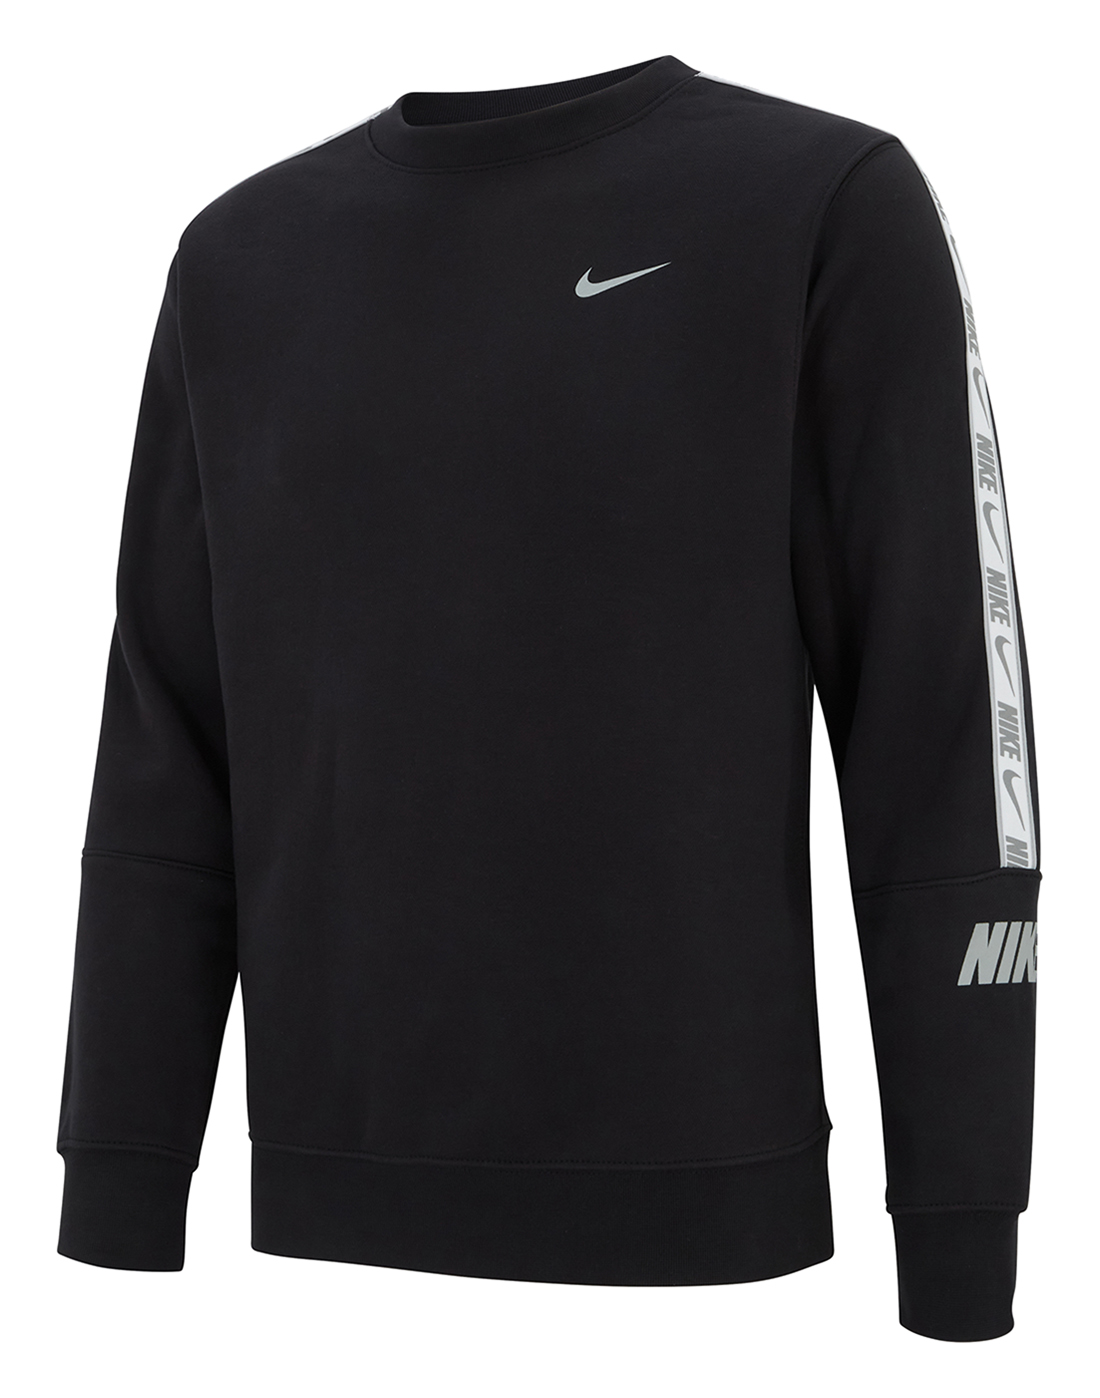 Nike Mens Reflective Taping Crew Neck Sweatshirt - Black | Life Style ...